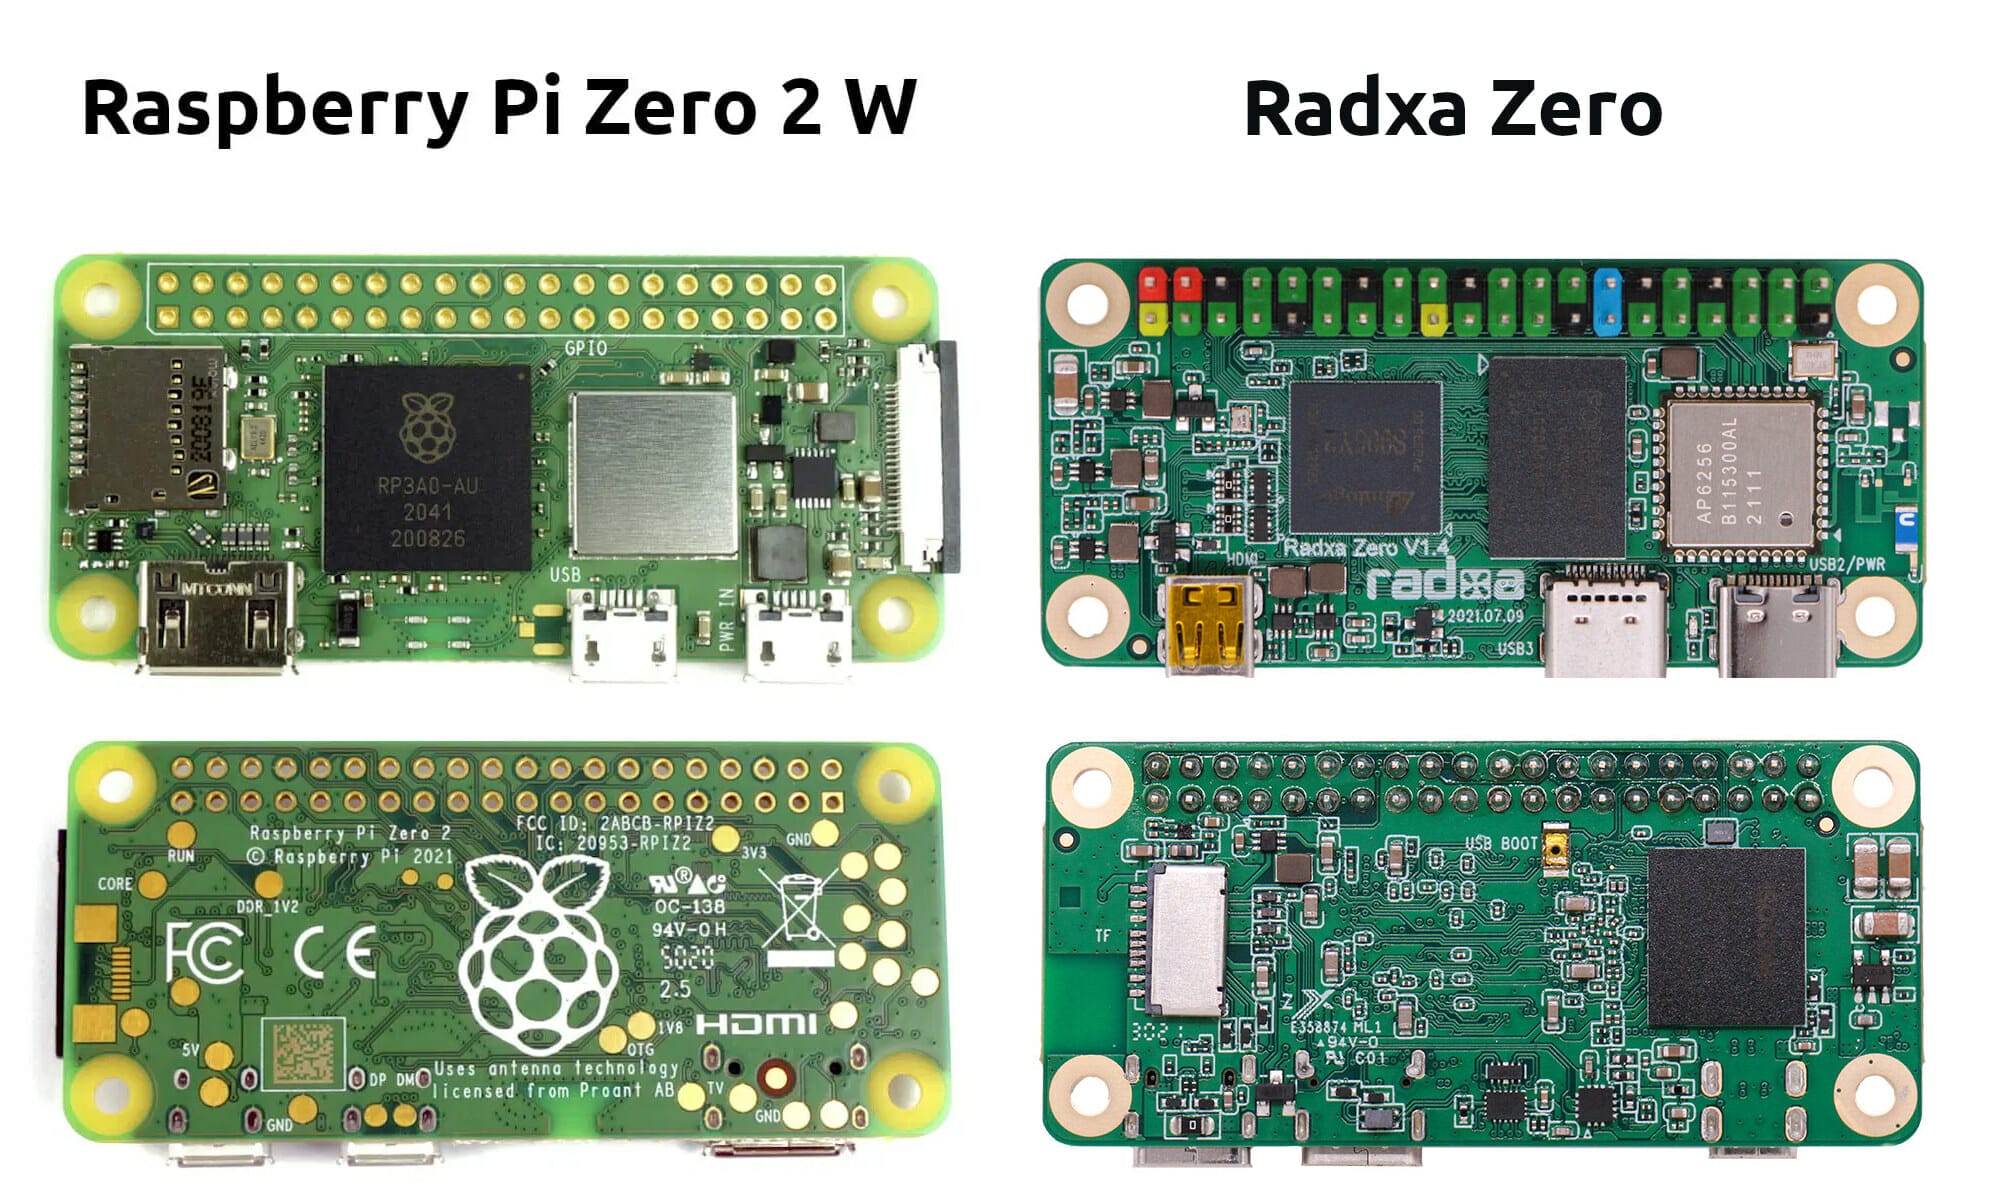 Raspberry Pi Zero 2 W vs Radxa Zero